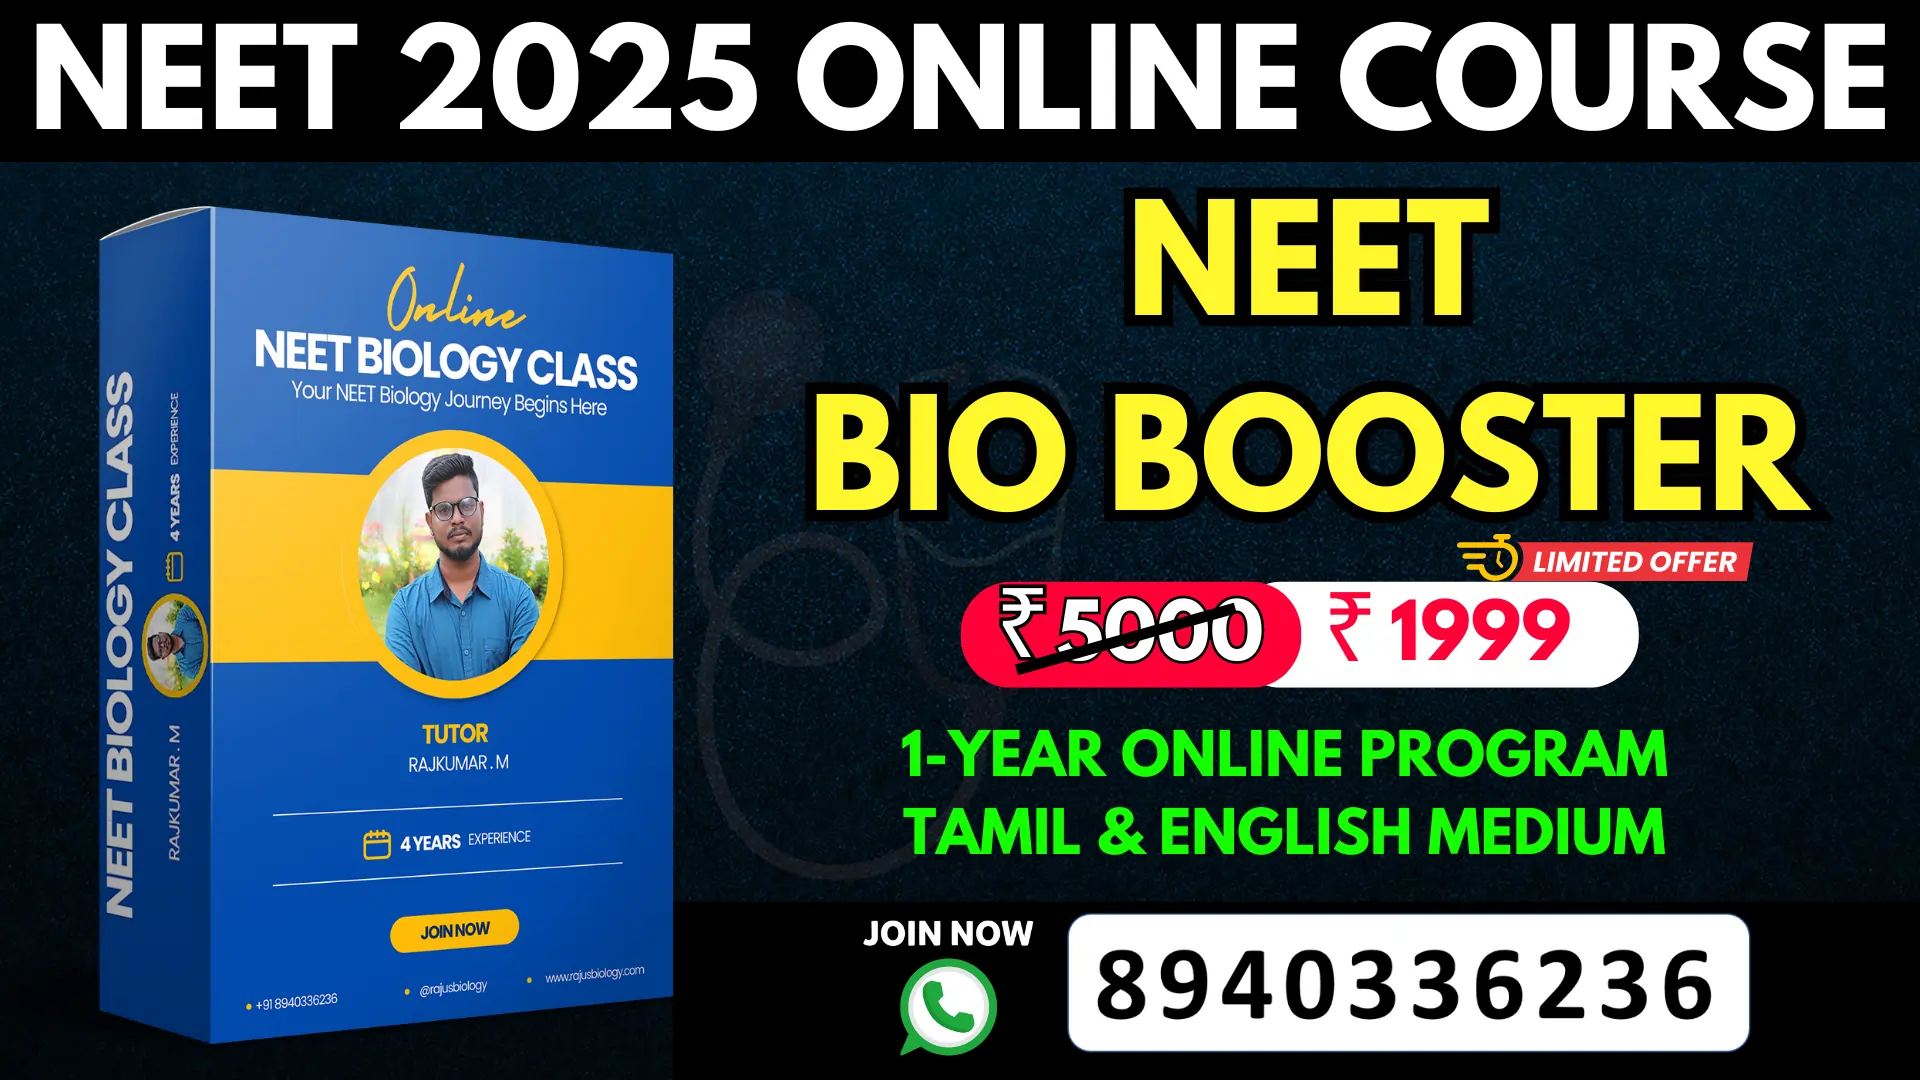 BIO BOOSTER: Online Classes for NEET 2025